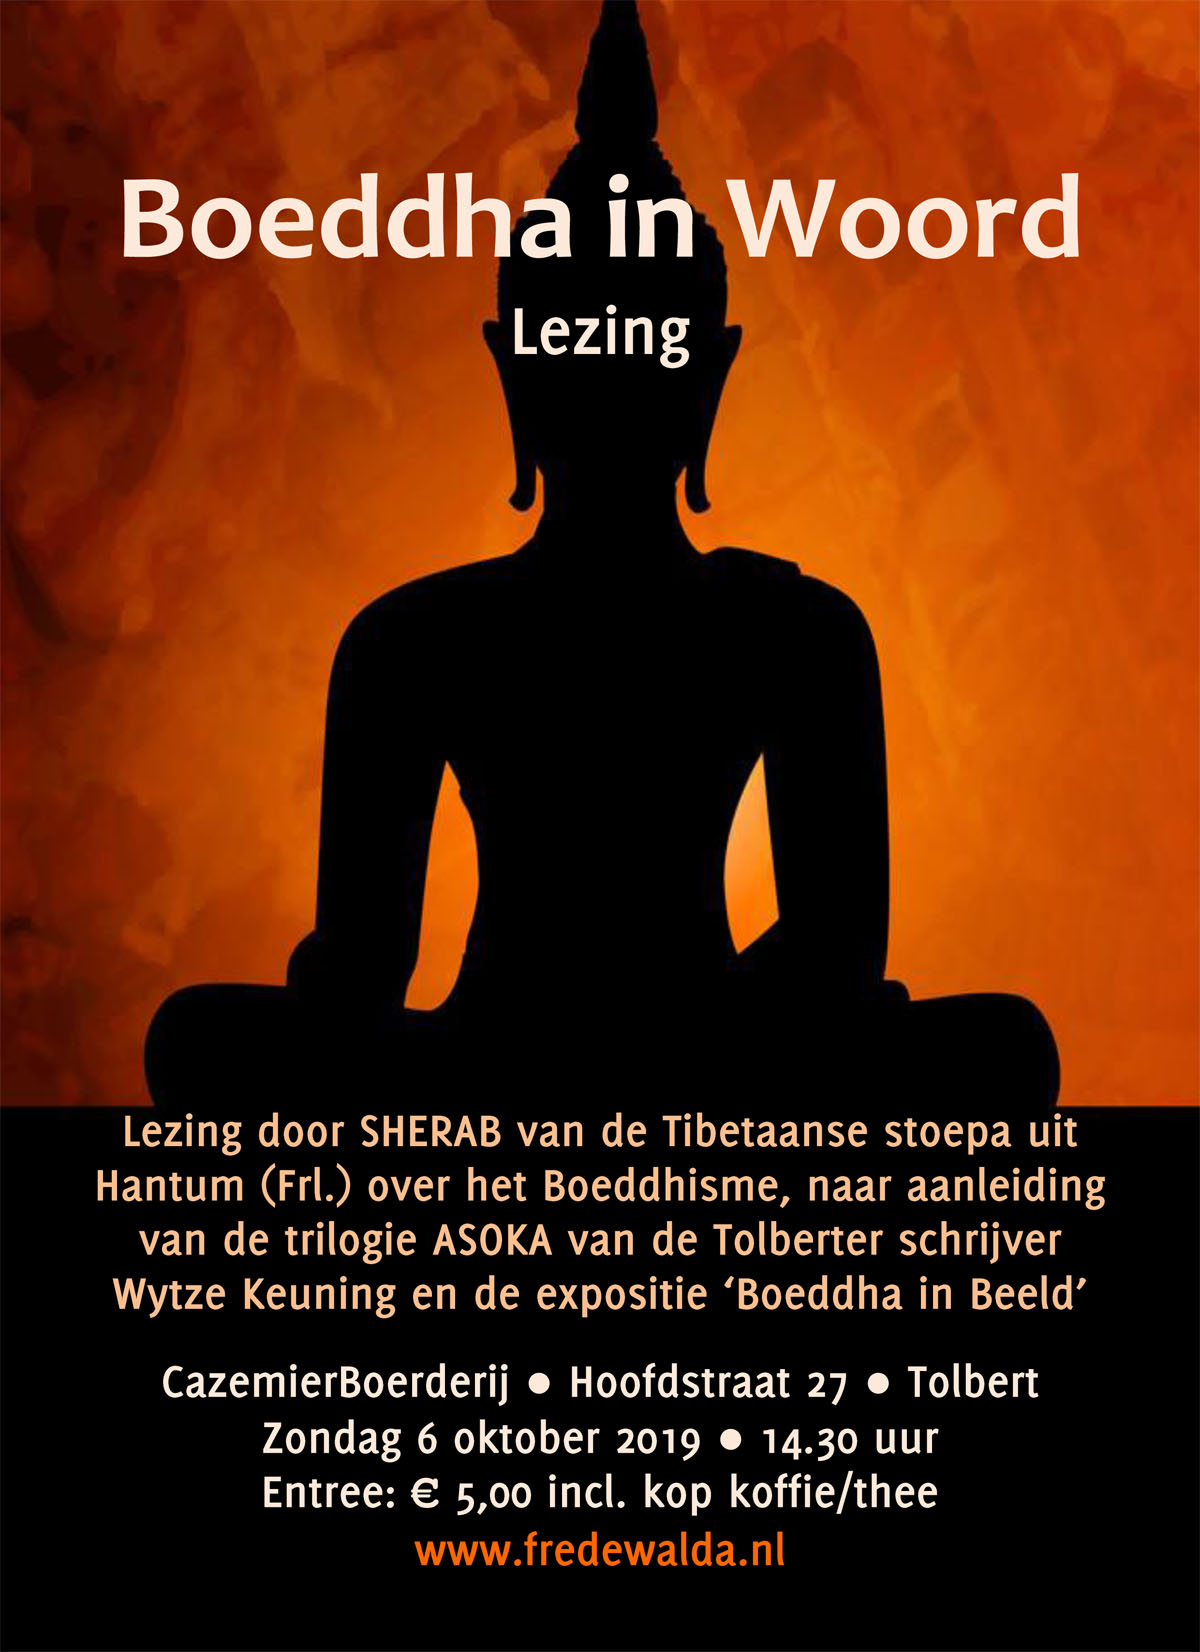 Boeddha in Woord poster